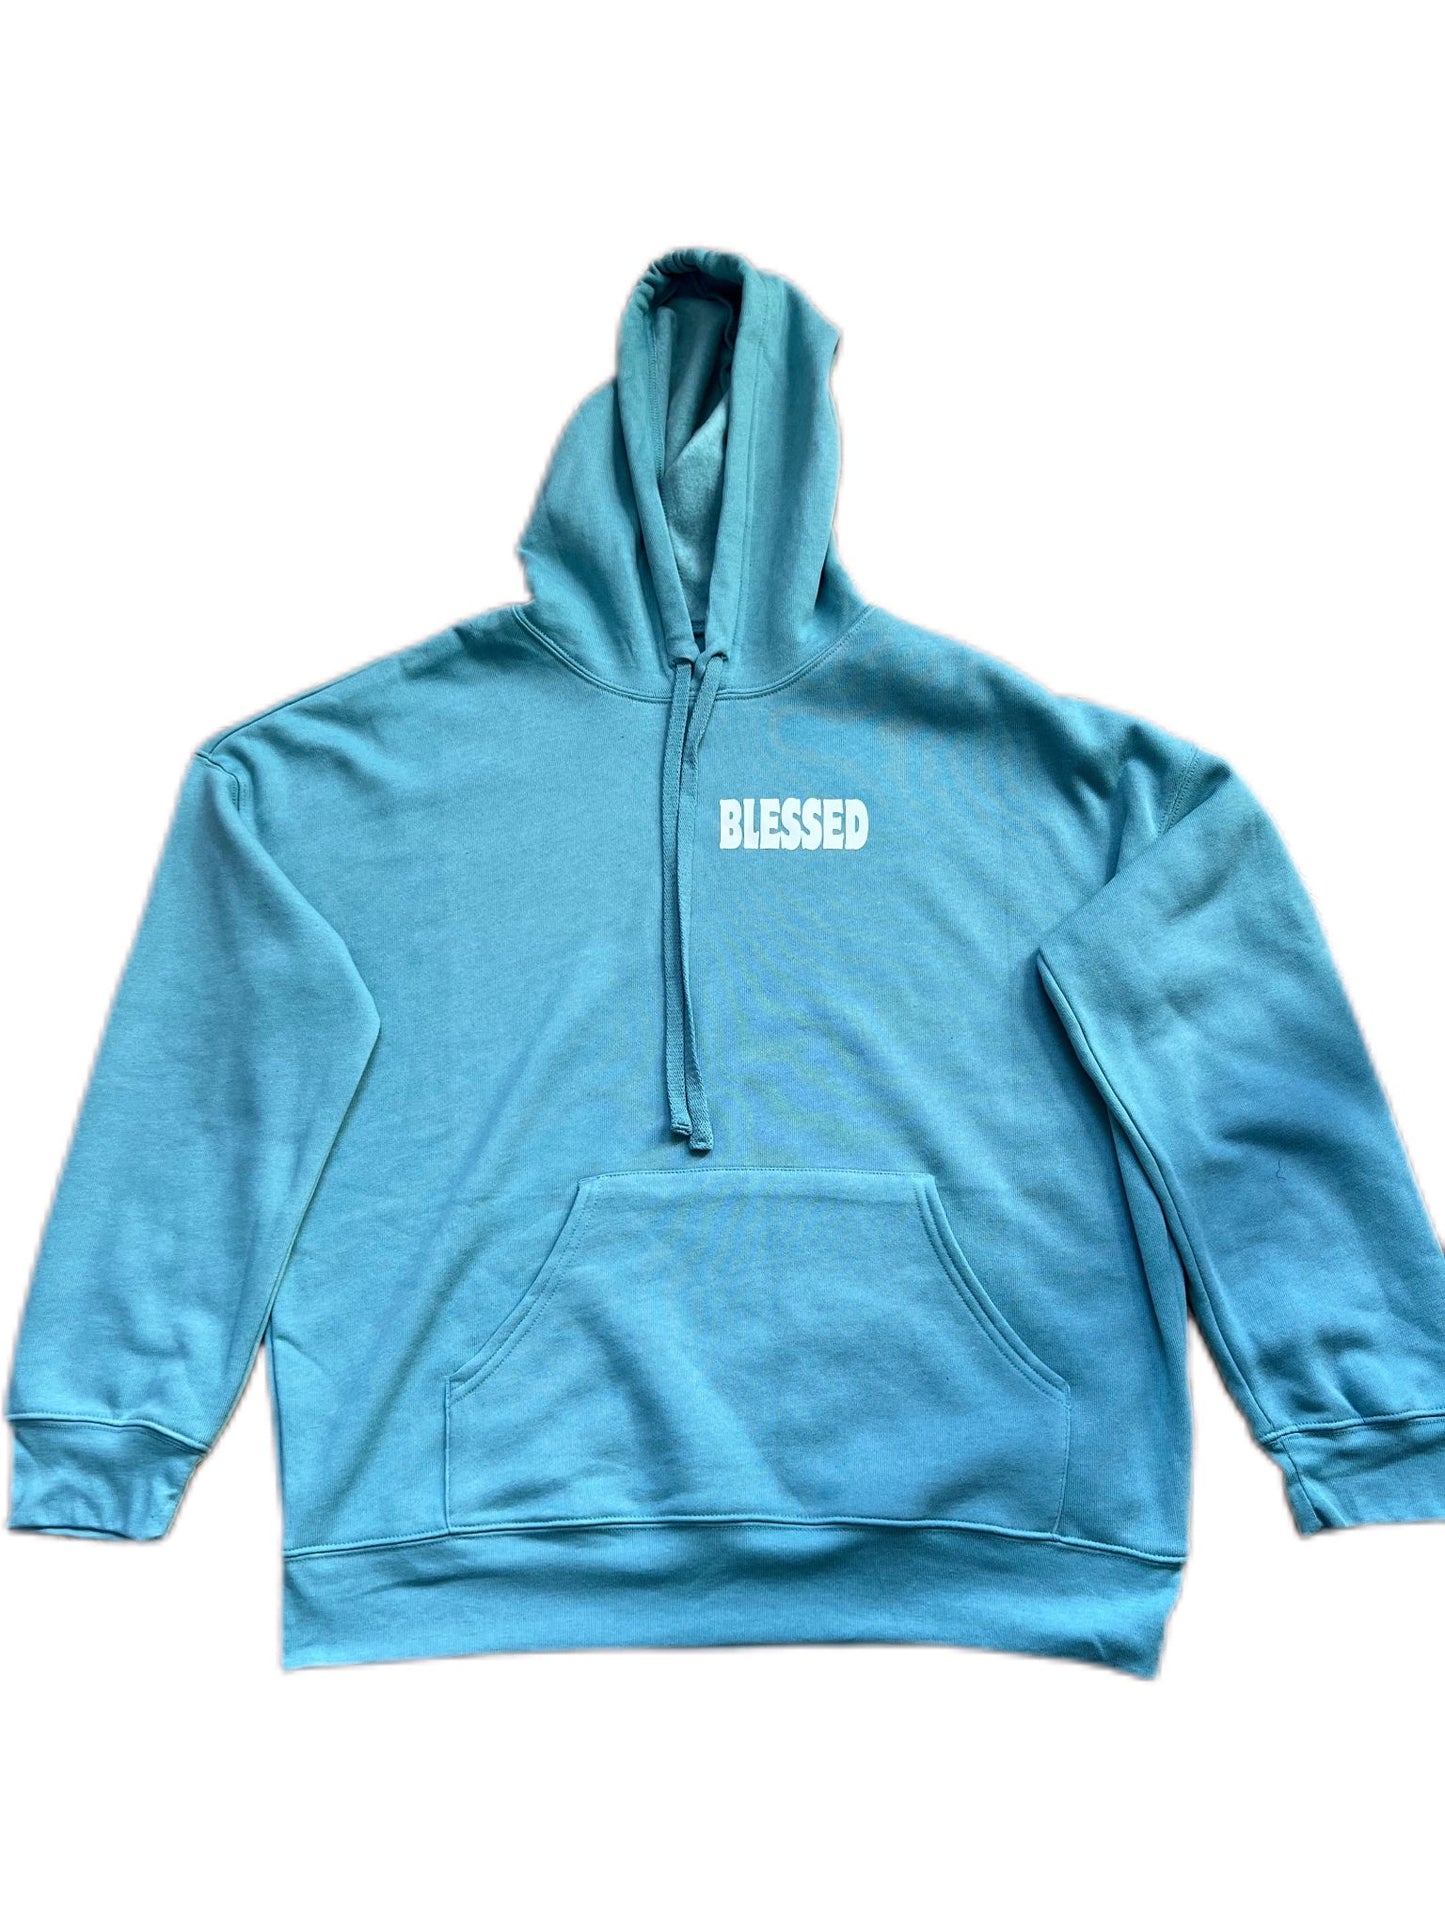 BLESSED hoodie in heather blue